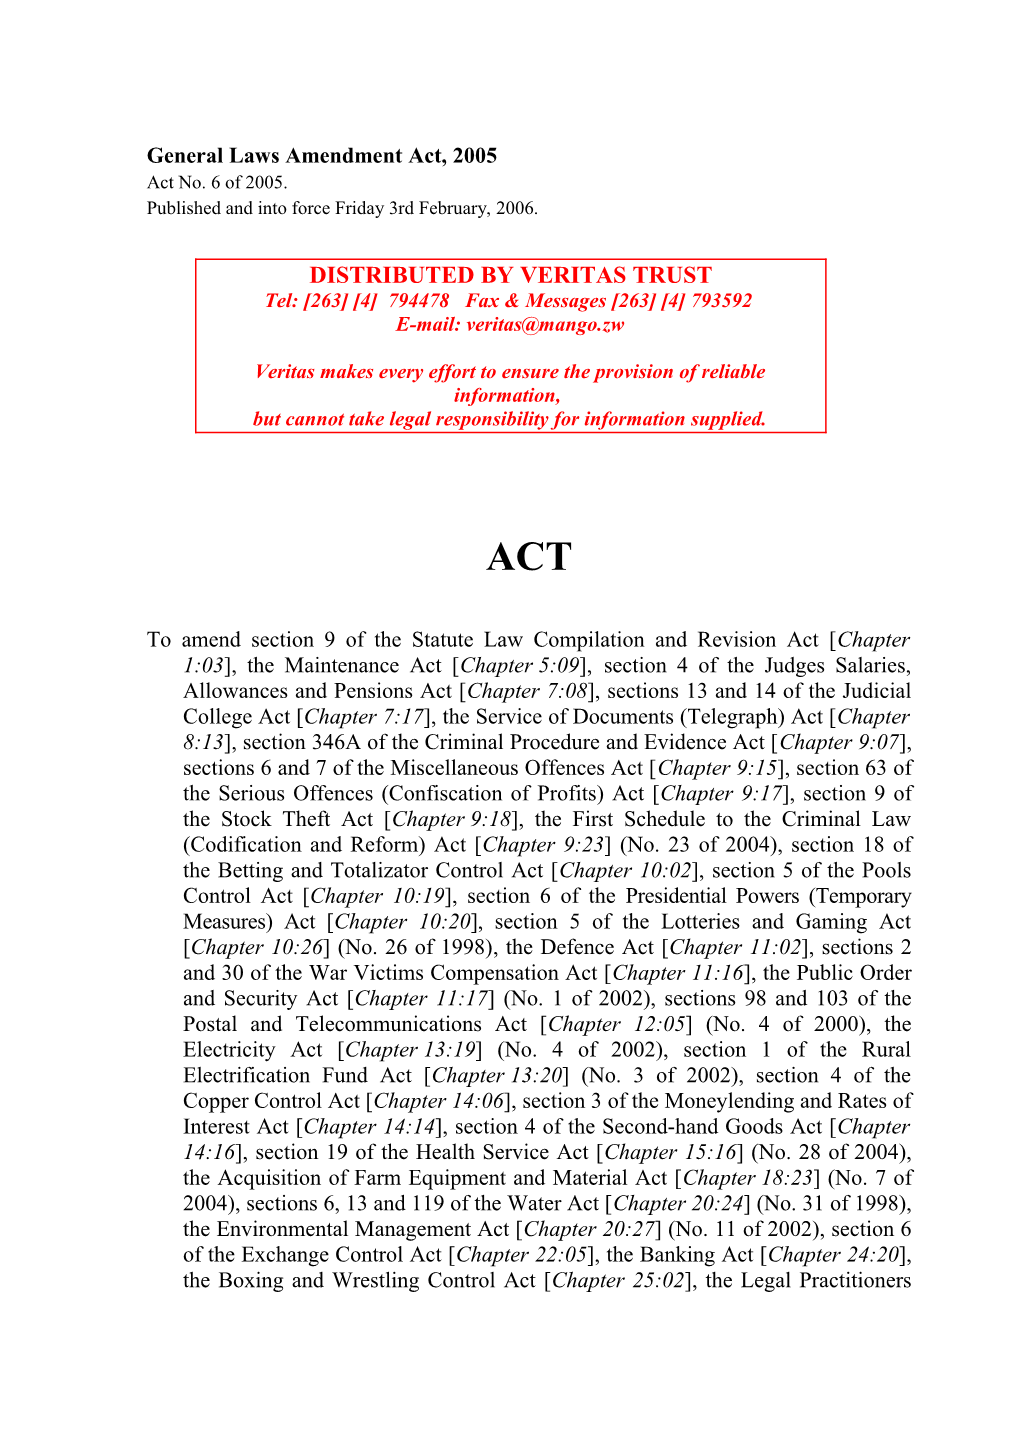 General Laws Amendment Act 2005 - Act 6-2005